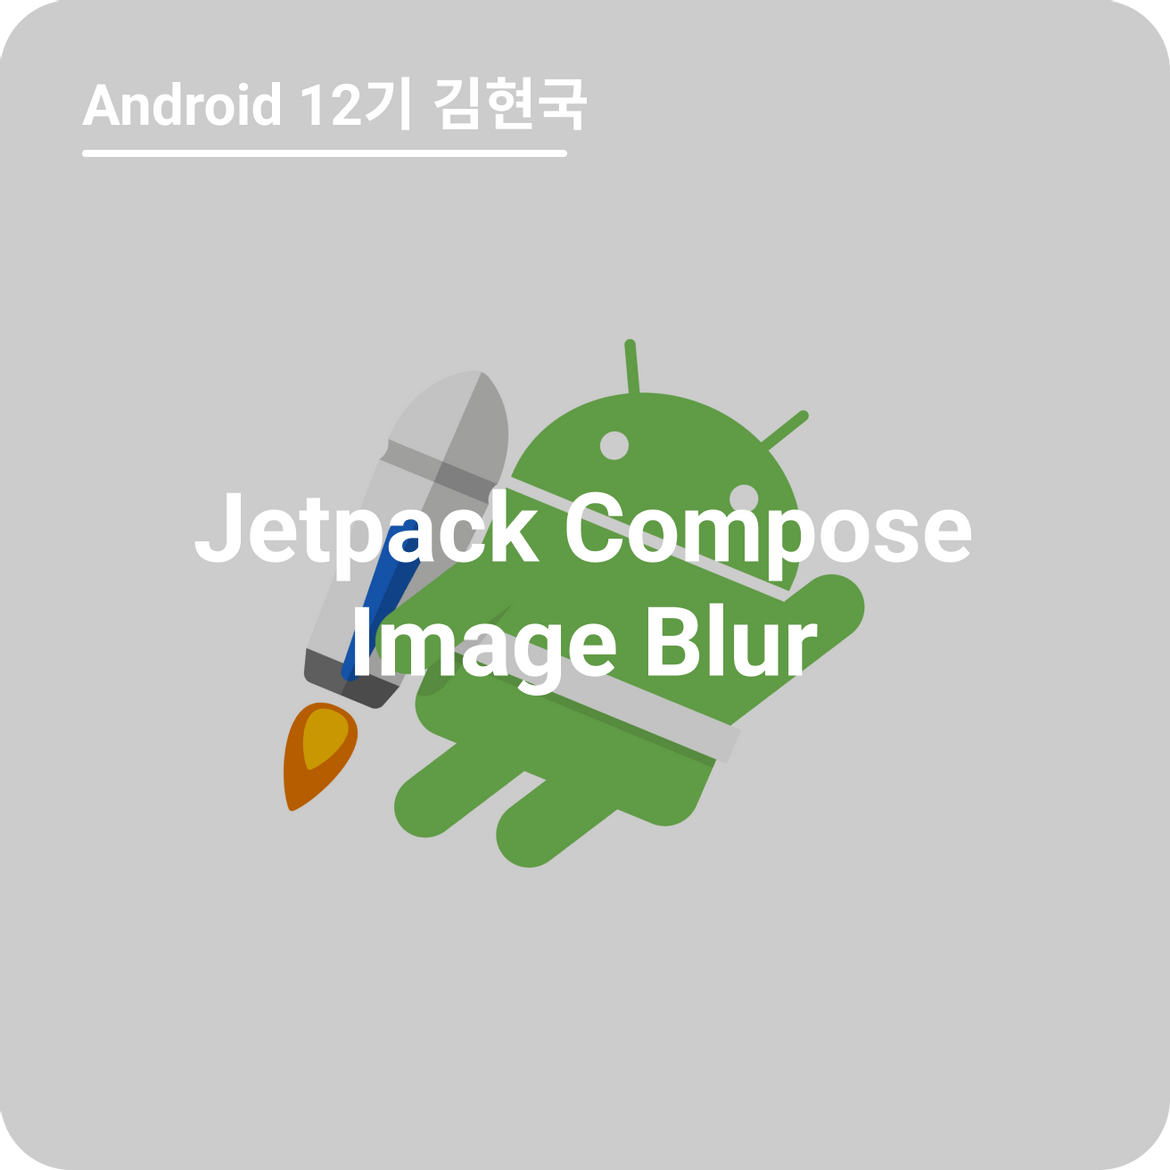 Jetpack Compose 이미지 blur 처리하기